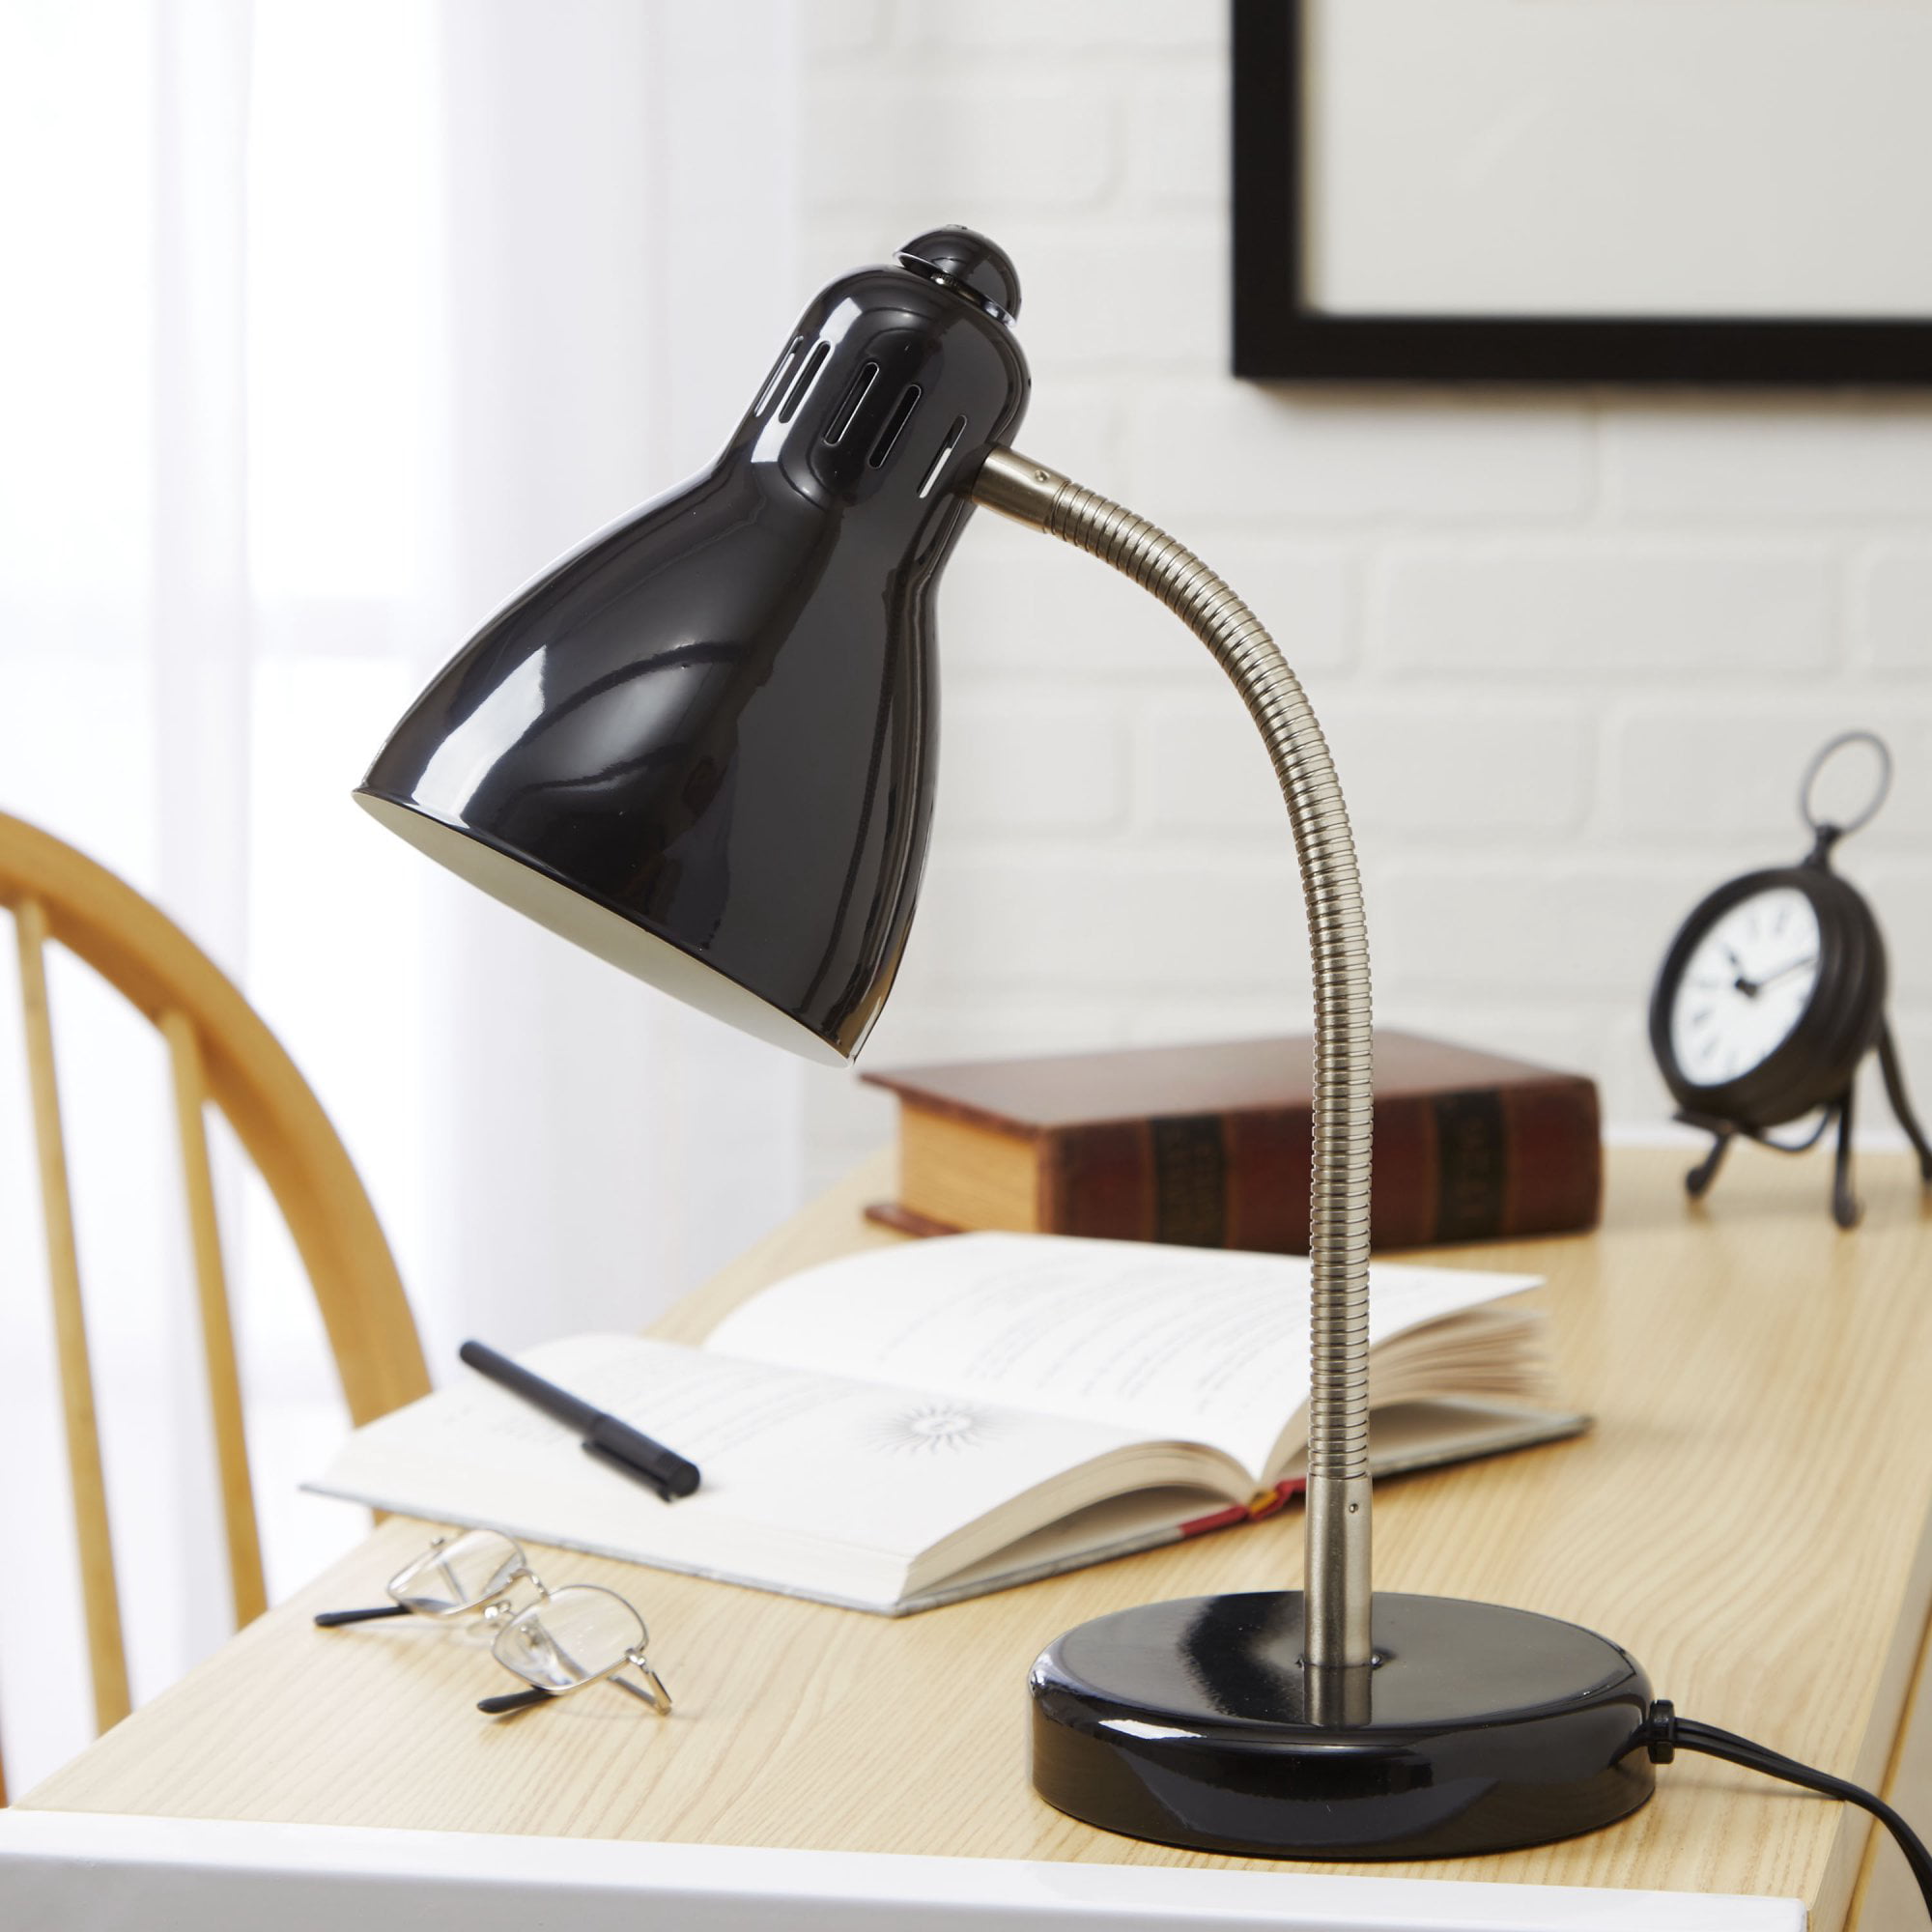 Mainstays Black Gooseneck Desk Lamp, CFL Bulb Included - Walmart.com